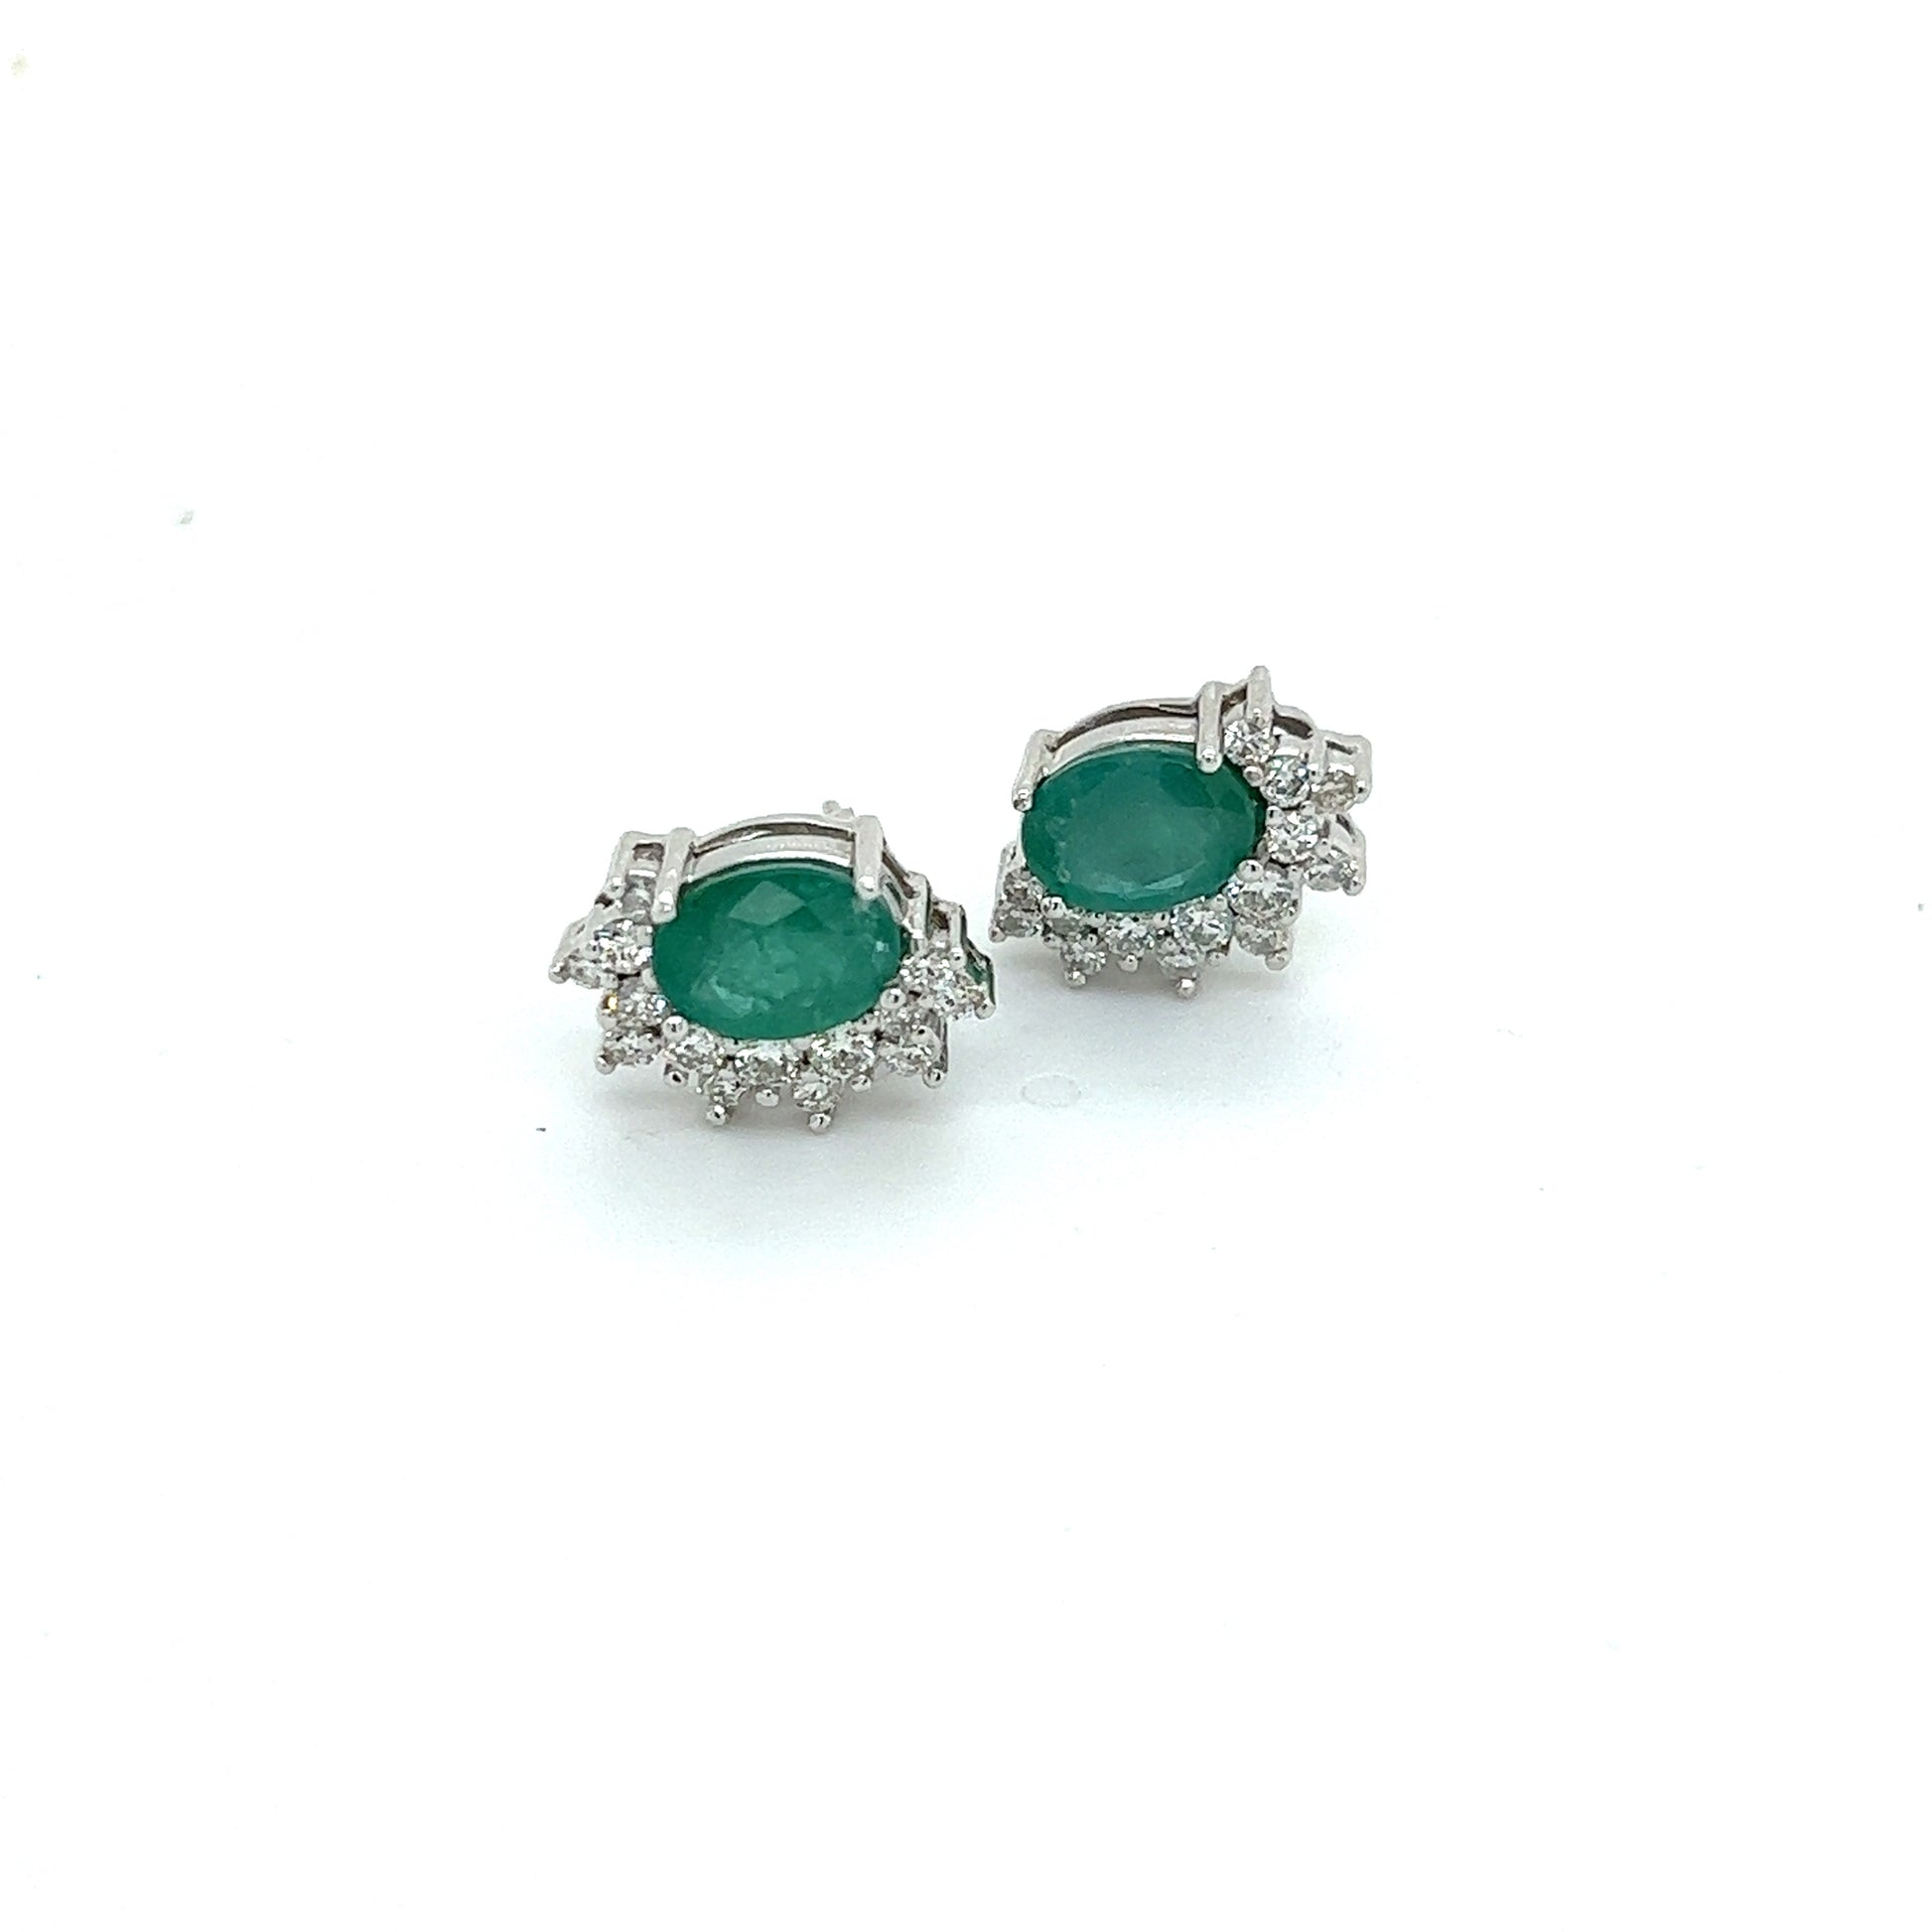 Natural Emerald Diamond Stud Earrings 14k White Gold 2.77 TCW Certified $6,950 211898 - Certified Fine Jewelry